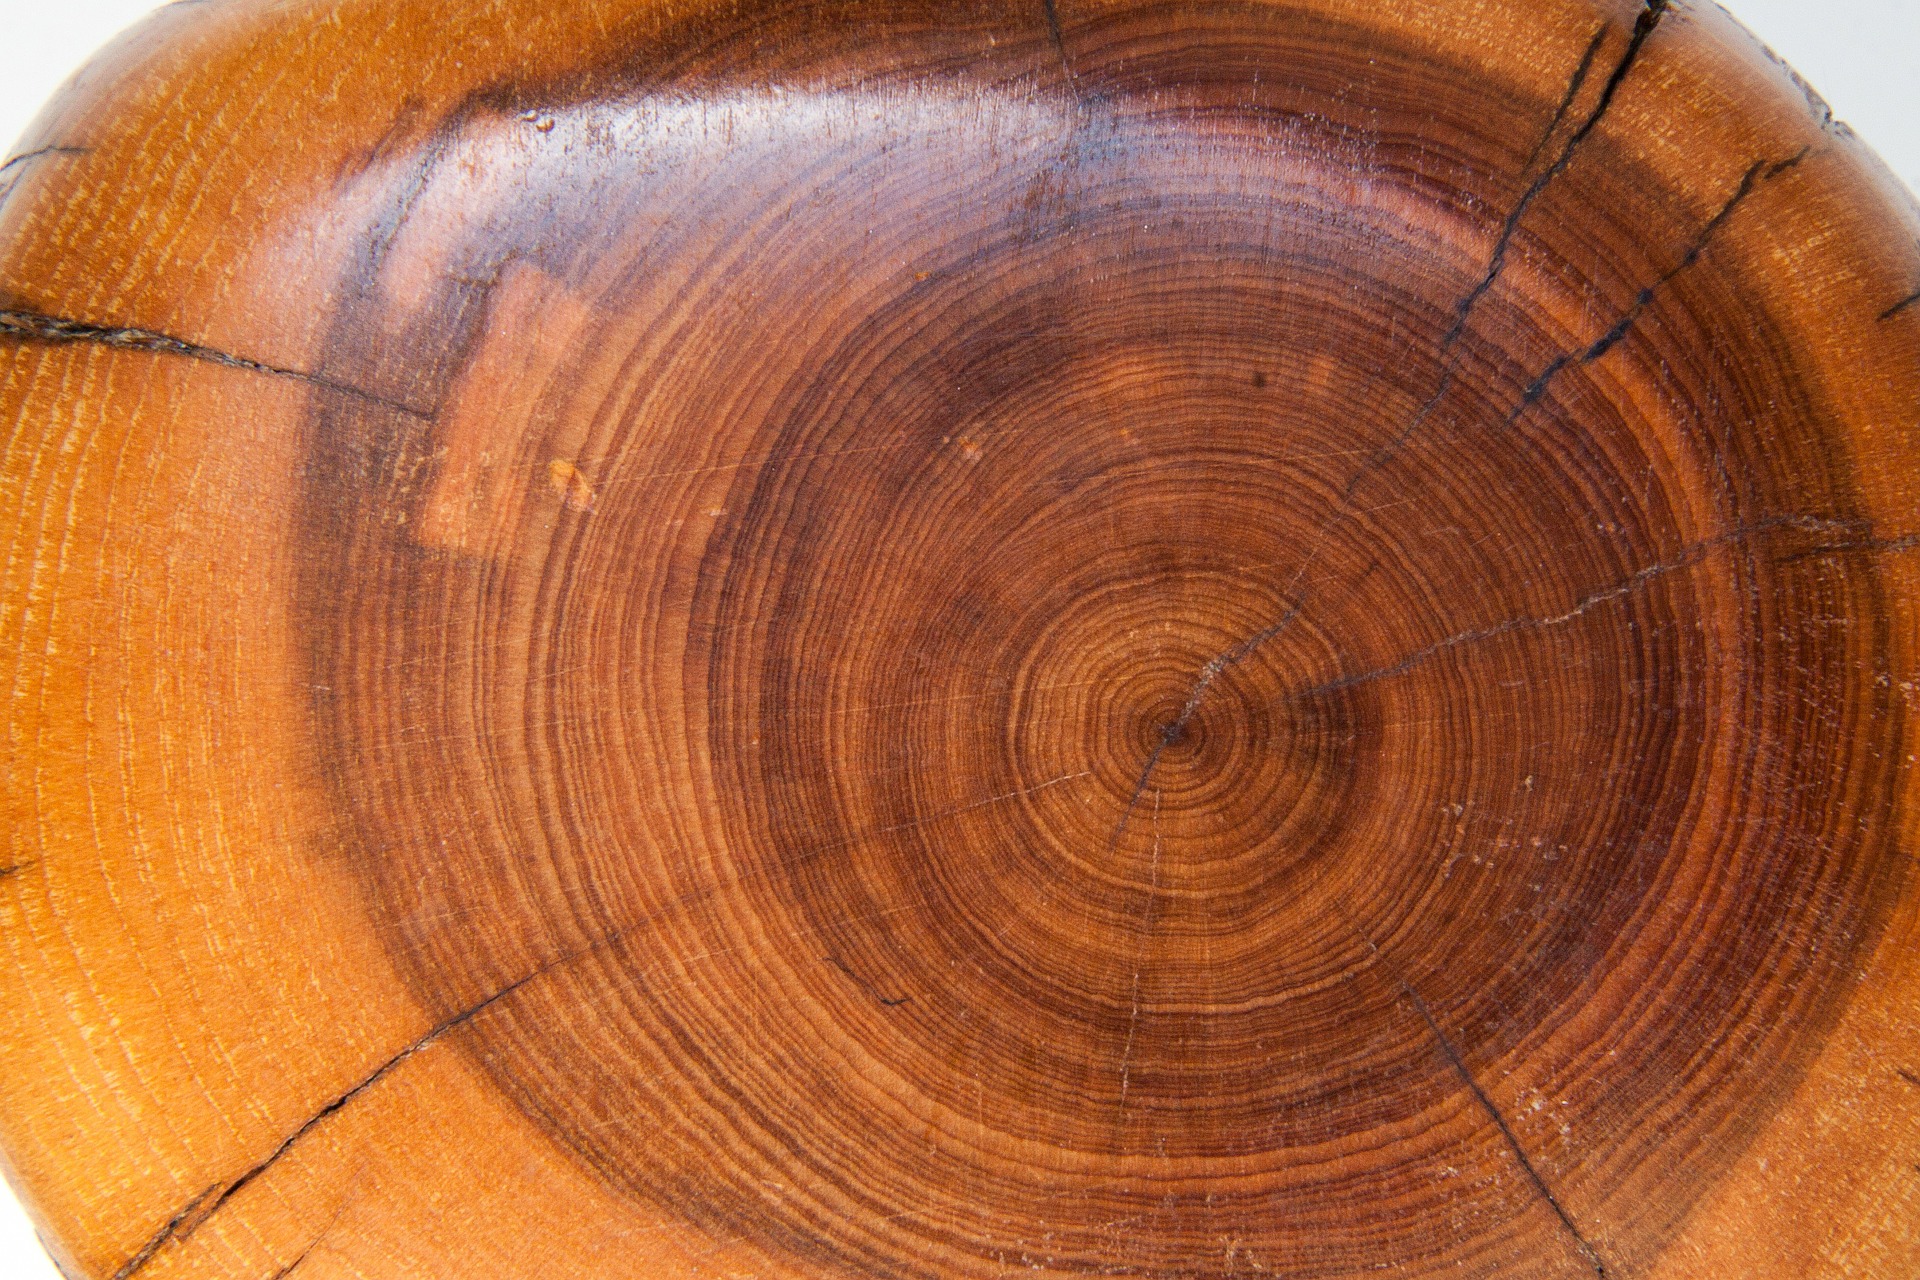 Wooden Texture, Circle, Design, Spiral, Texture, HQ Photo